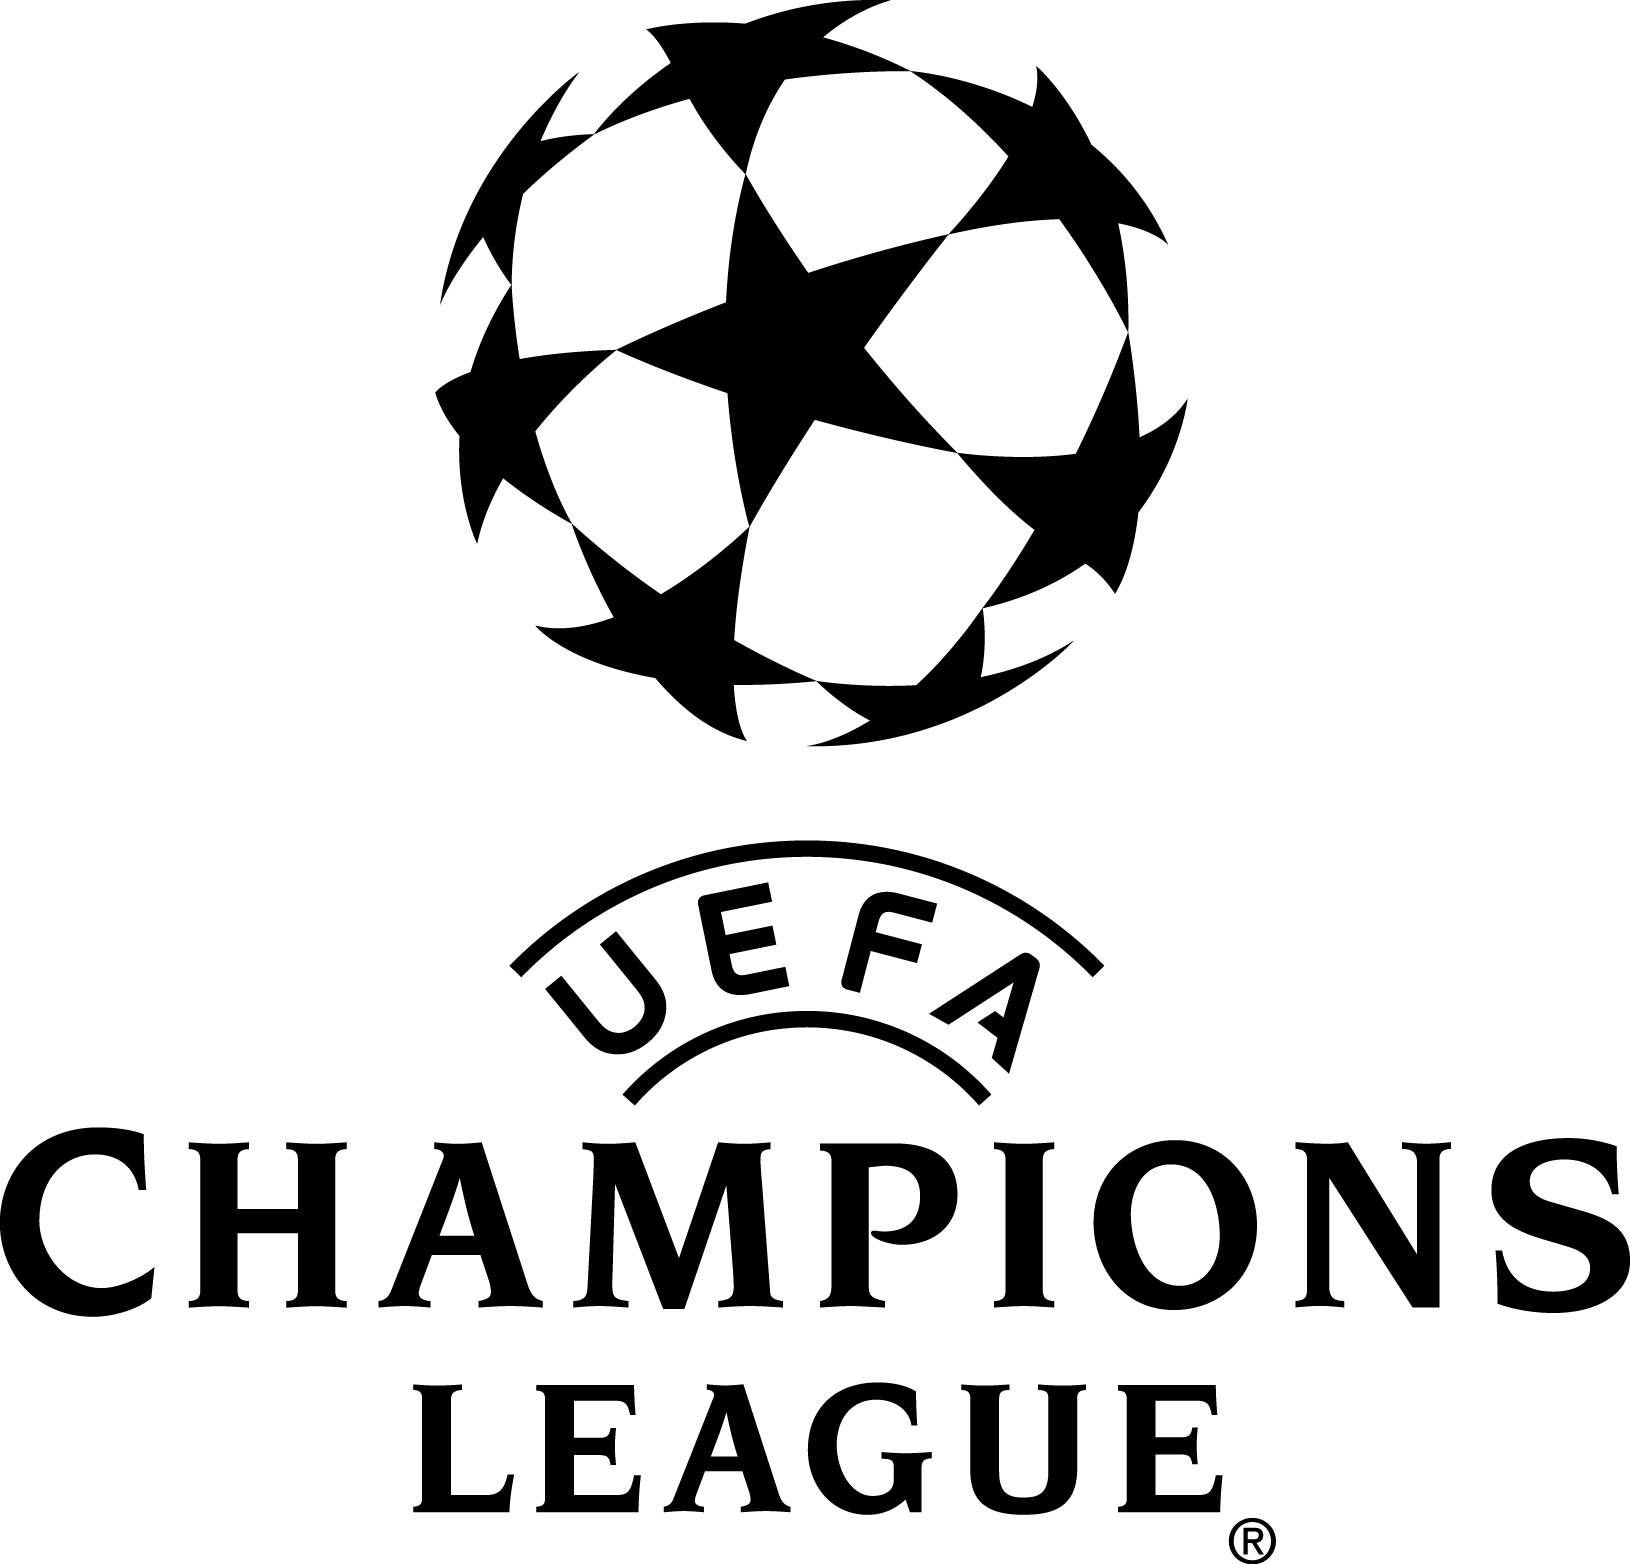 UEFA Champions League logo (classic), Uefa Vector Logos PNG - Free PNG